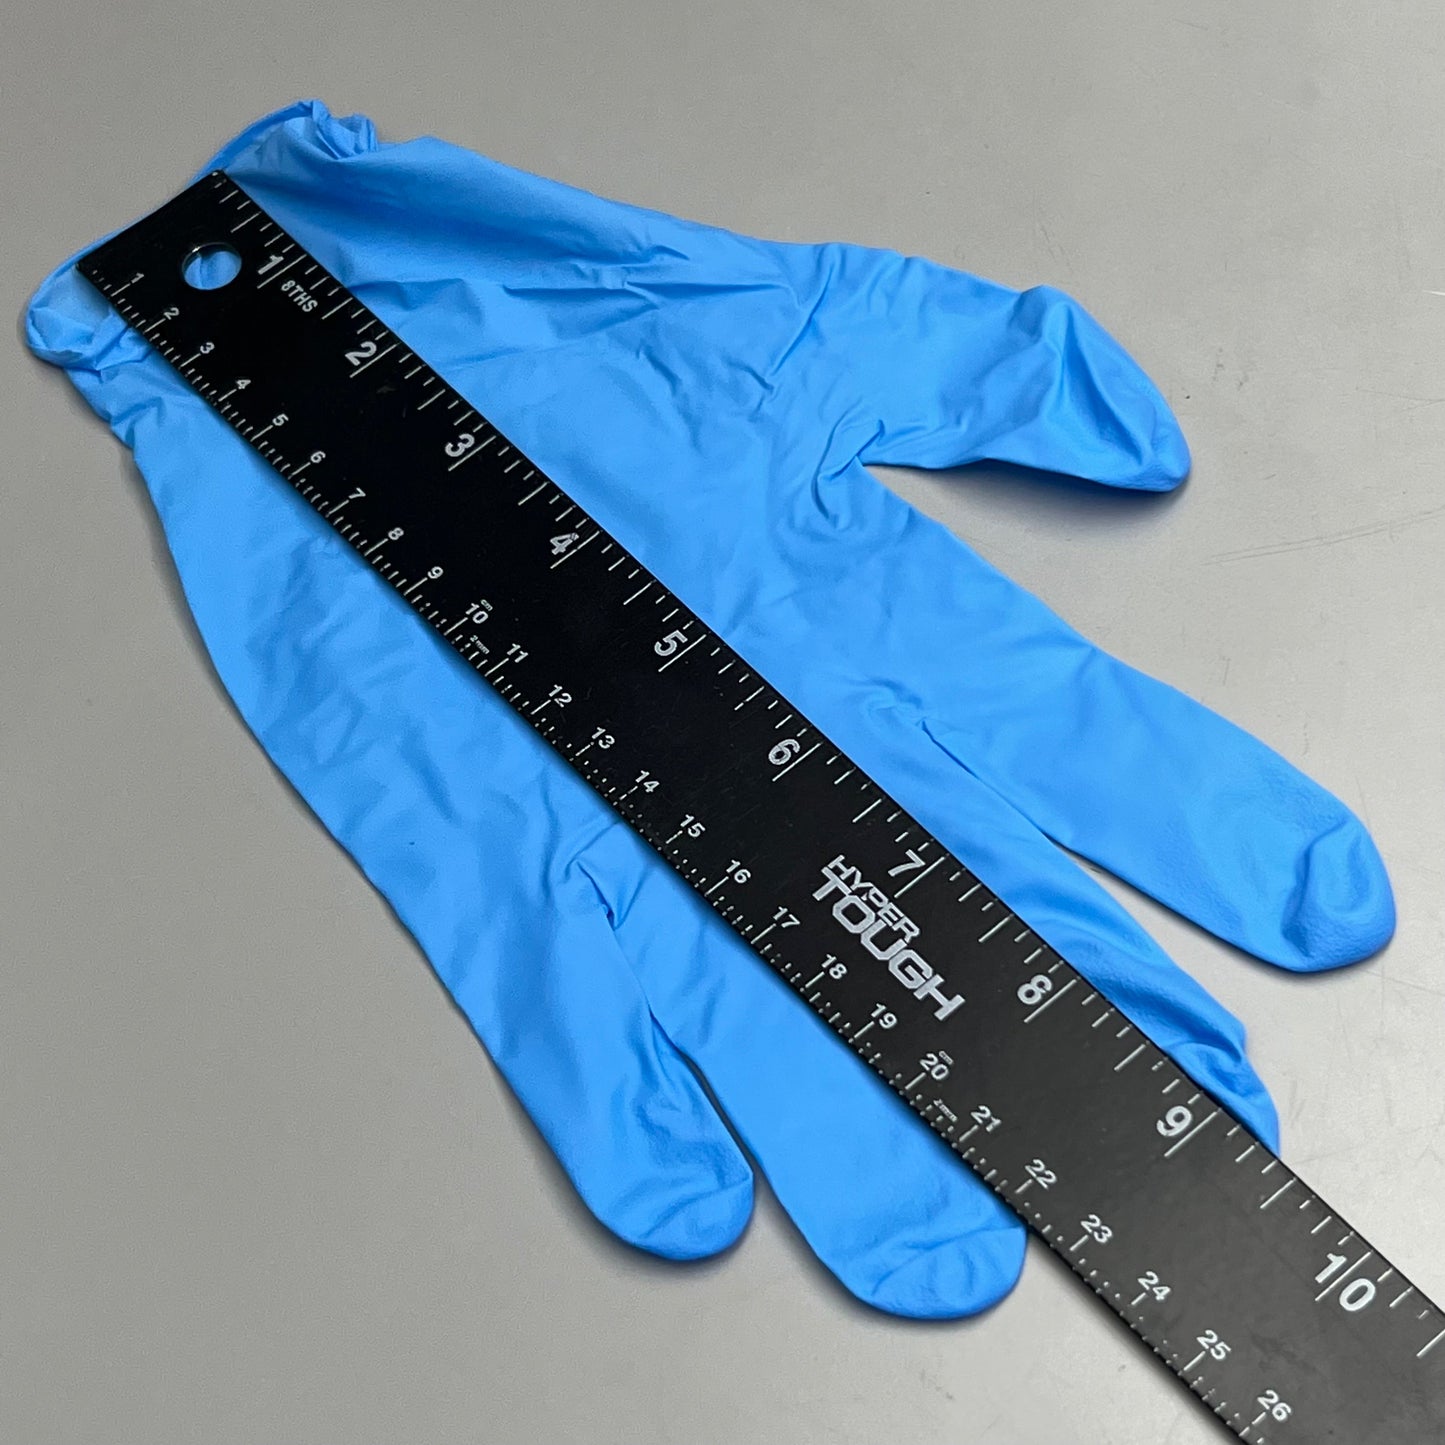 HOSPECO NPF (1,000 PACK) Nitrile Powder Free Exam Gloves Sz L Blue GL-N106FL